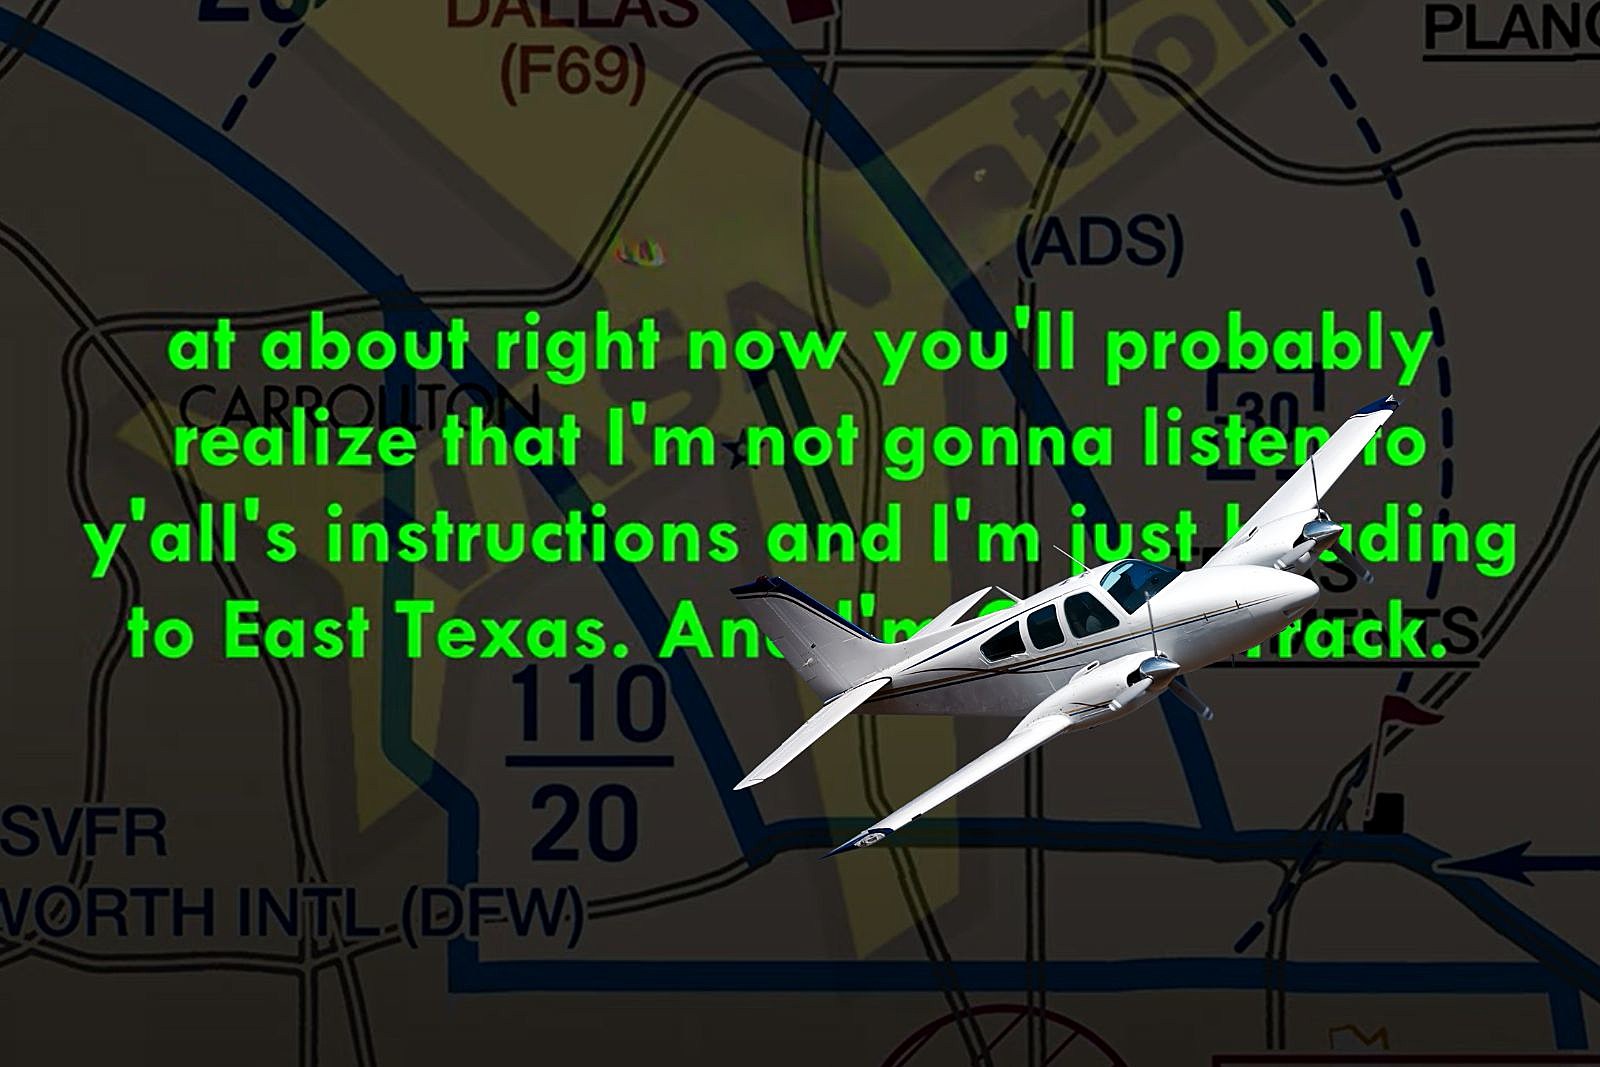 Suspicious Call Leads to Fatal Plane Crash in Texas